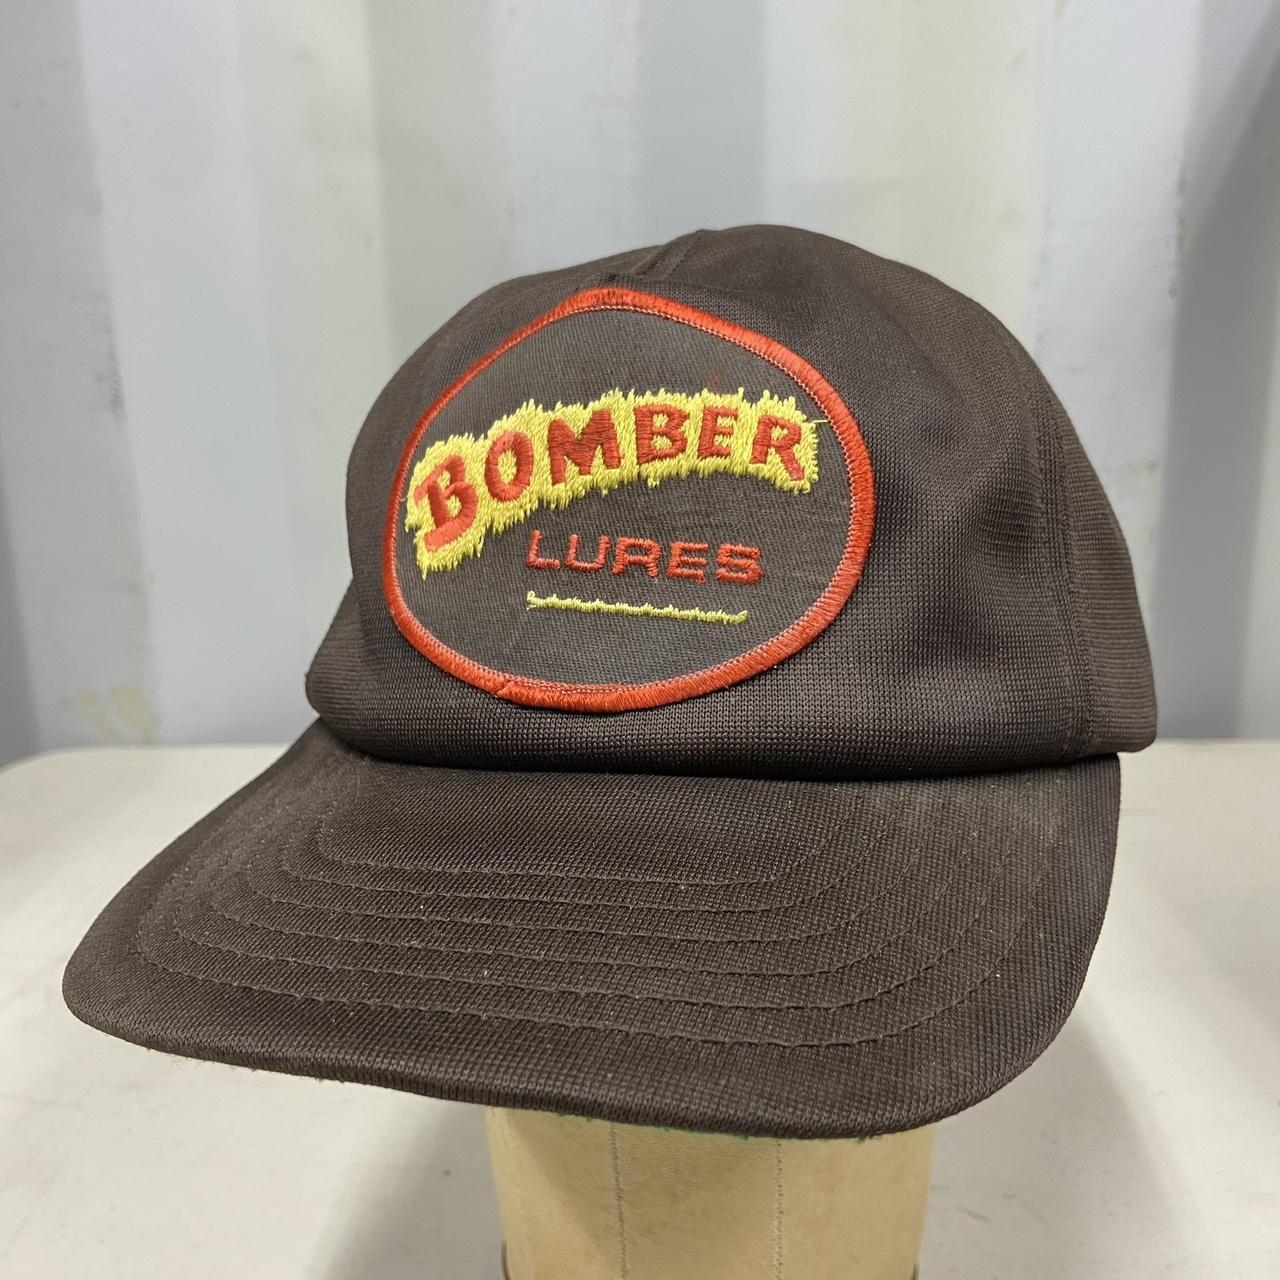 Vintage bomber fishing lures snapback hat , good